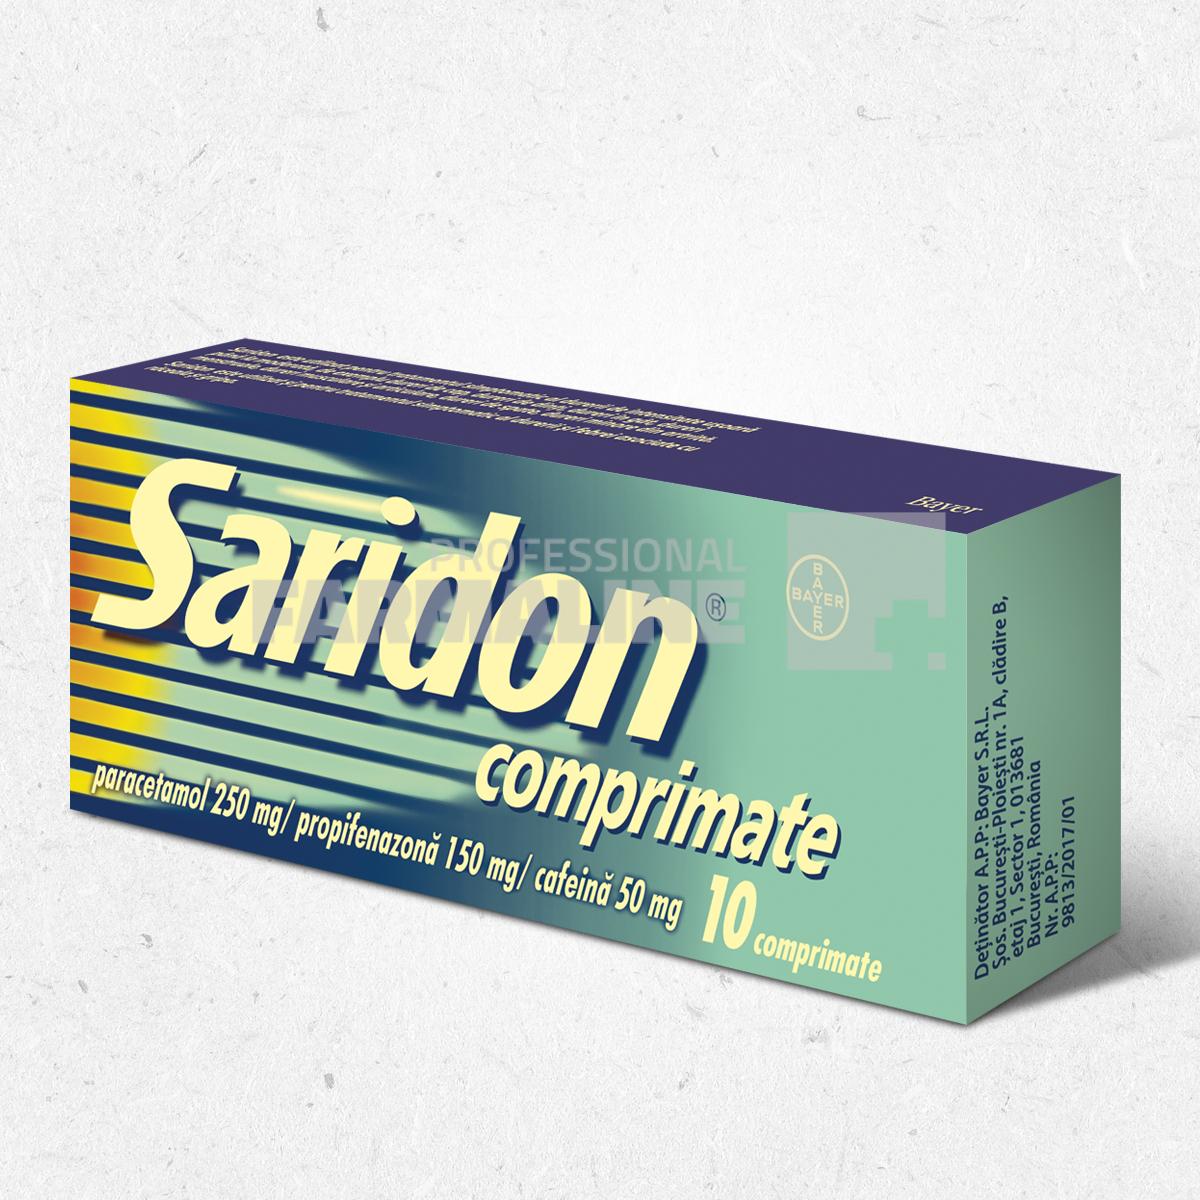 Saridon 10 comprimate